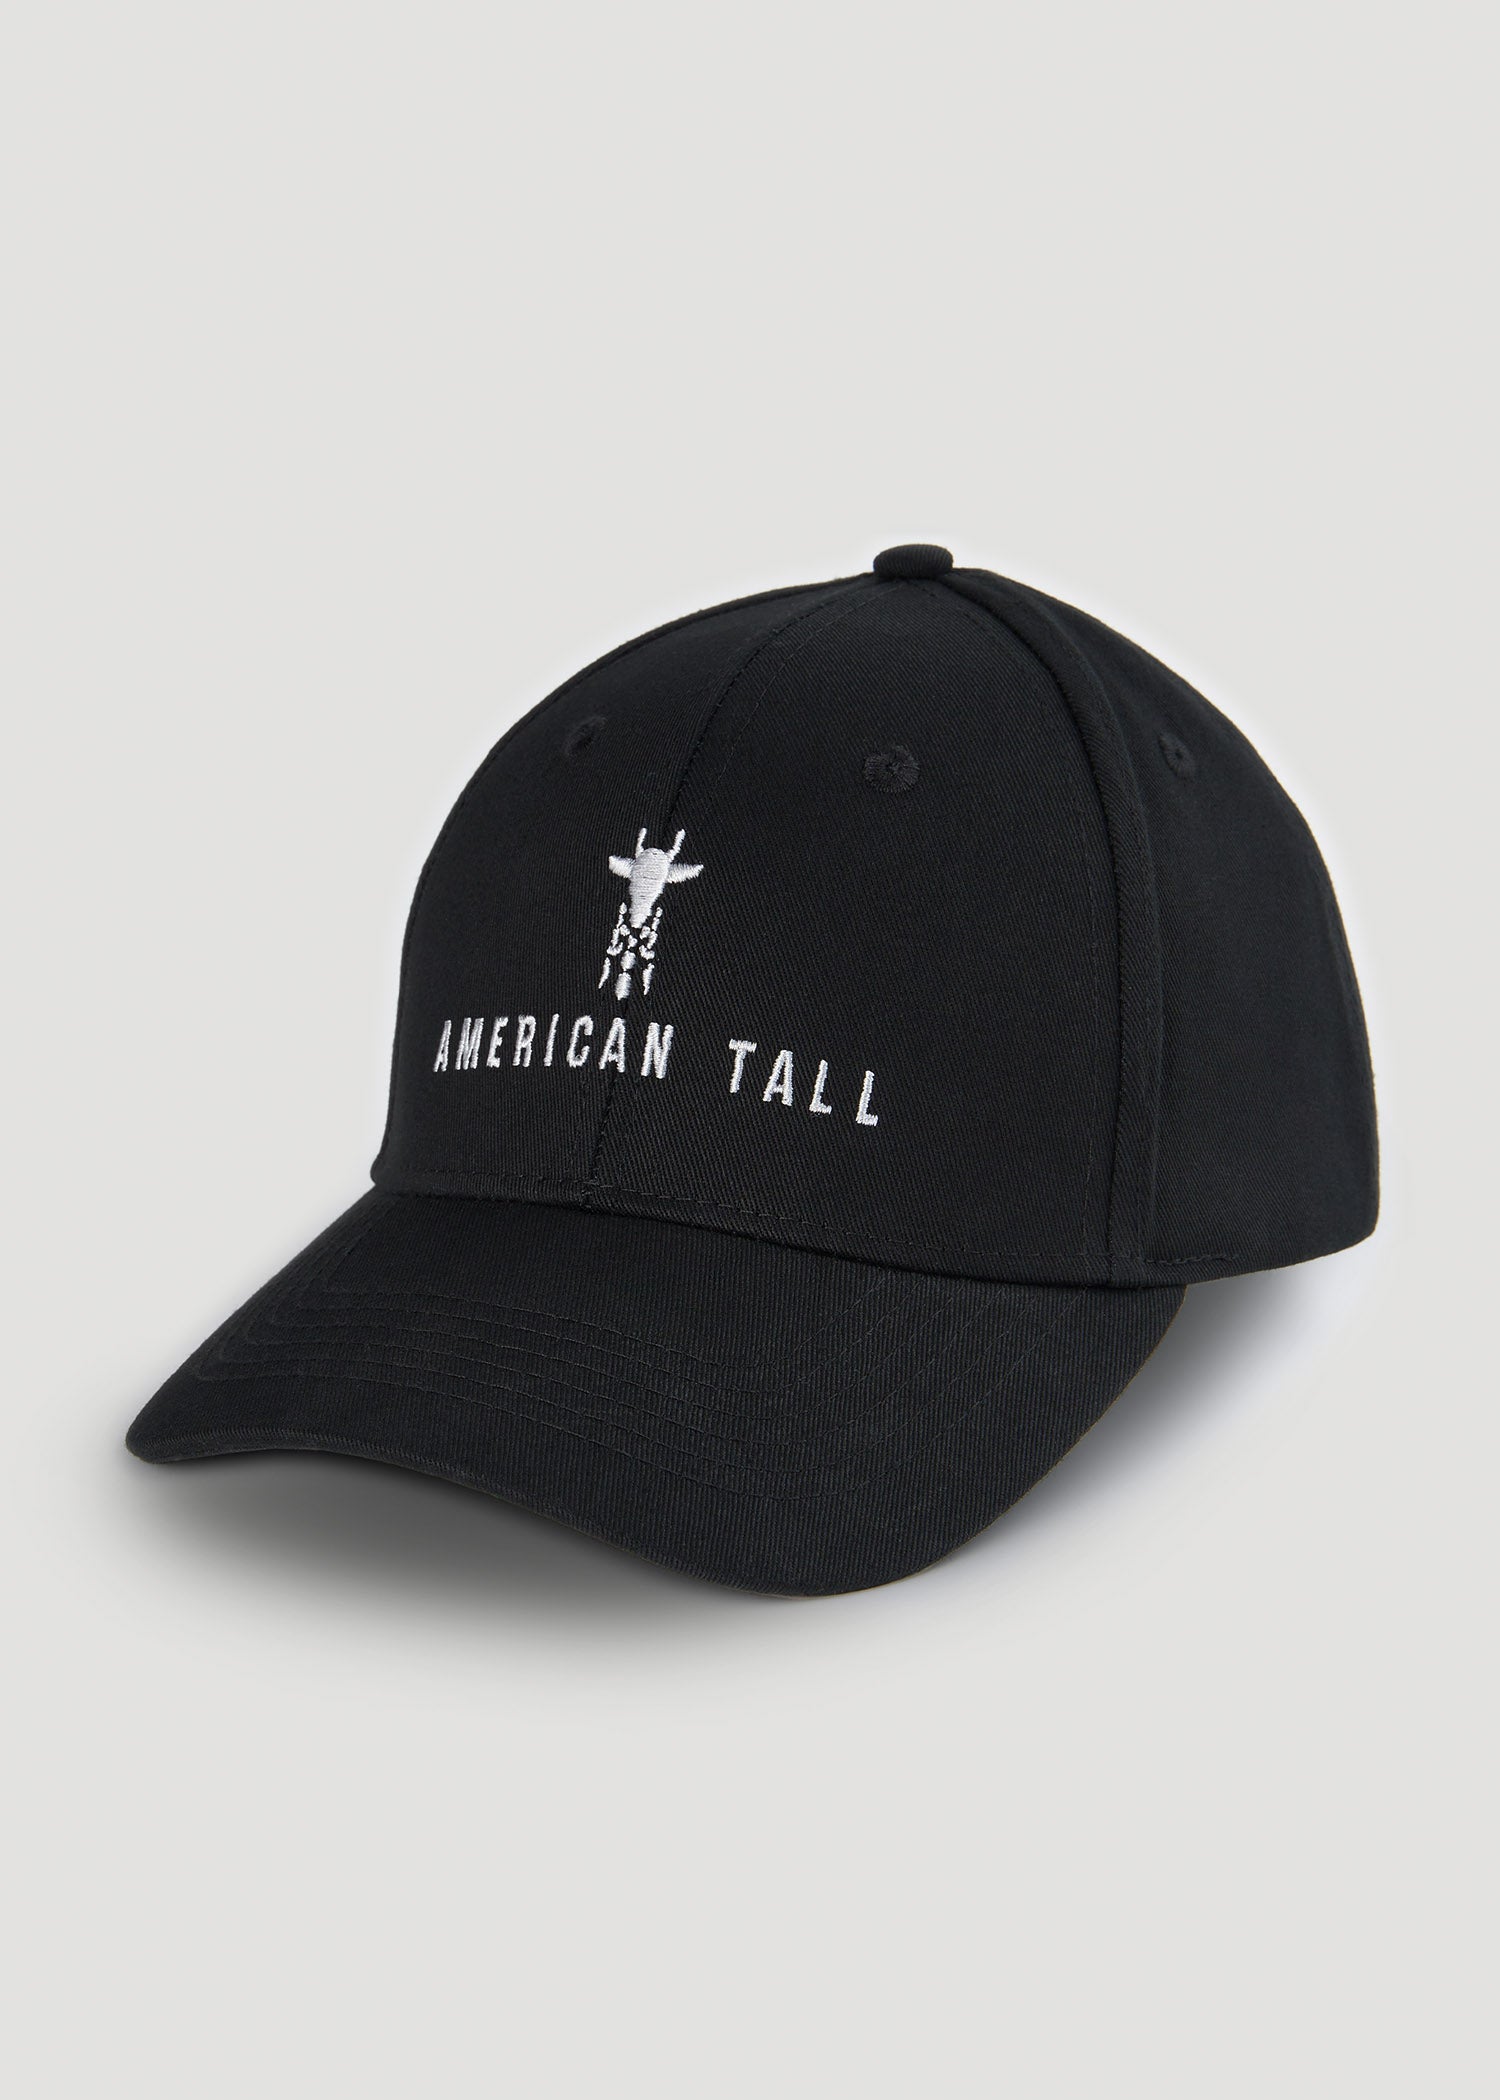 American Tall Baseball Hat in Black